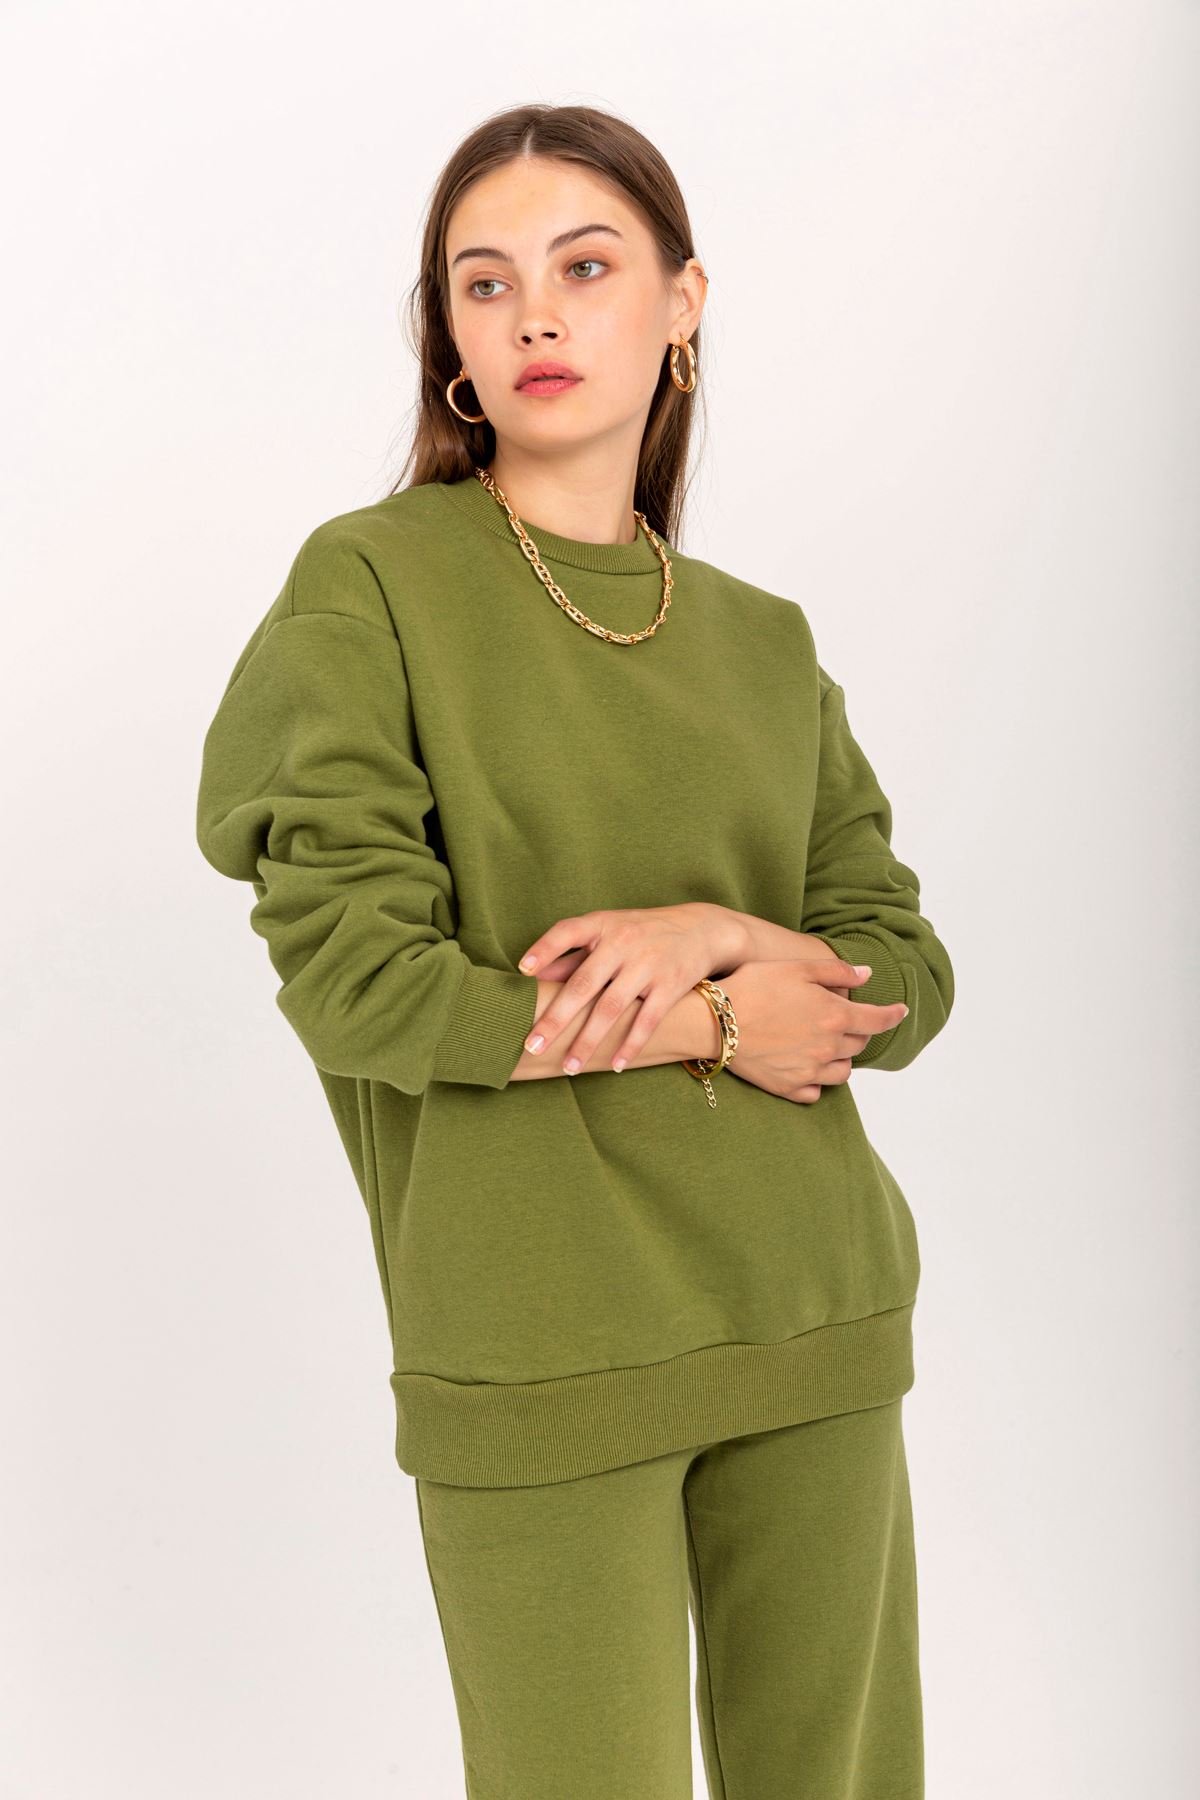 Third Knit With Wool İnside Fabric Long Sleeve Below Hip Women Sweatshirt - Khaki 